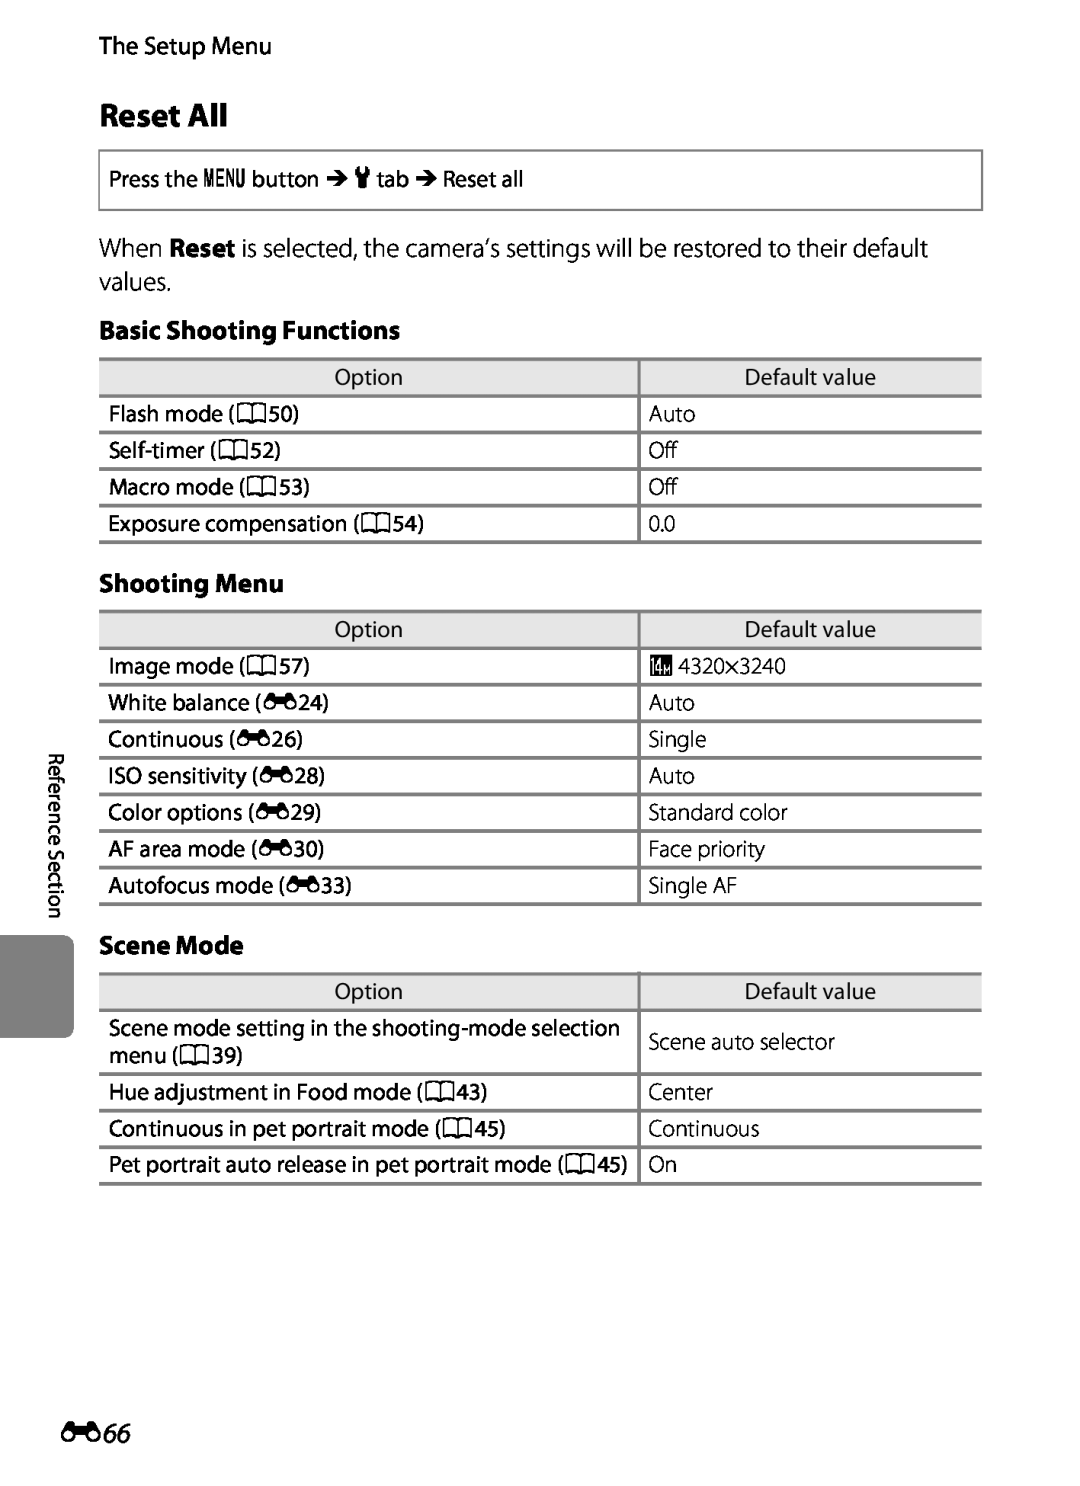 Nikon S2600 manual Reset All, Basic Shooting Functions, Shooting Menu, Scene Mode, The Setup Menu 